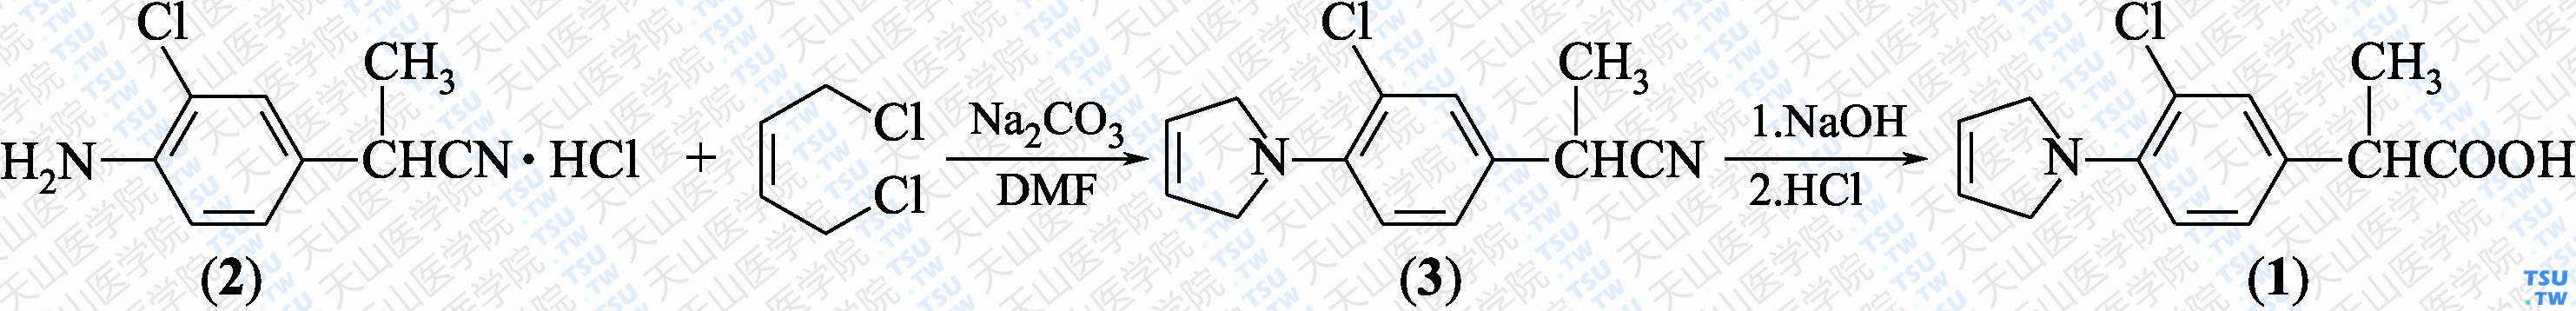 吡咯芬（分子式：C<sub>13</sub>H<sub>14</sub>ClNO<sub>2</sub>）的合成方法路线及其结构式